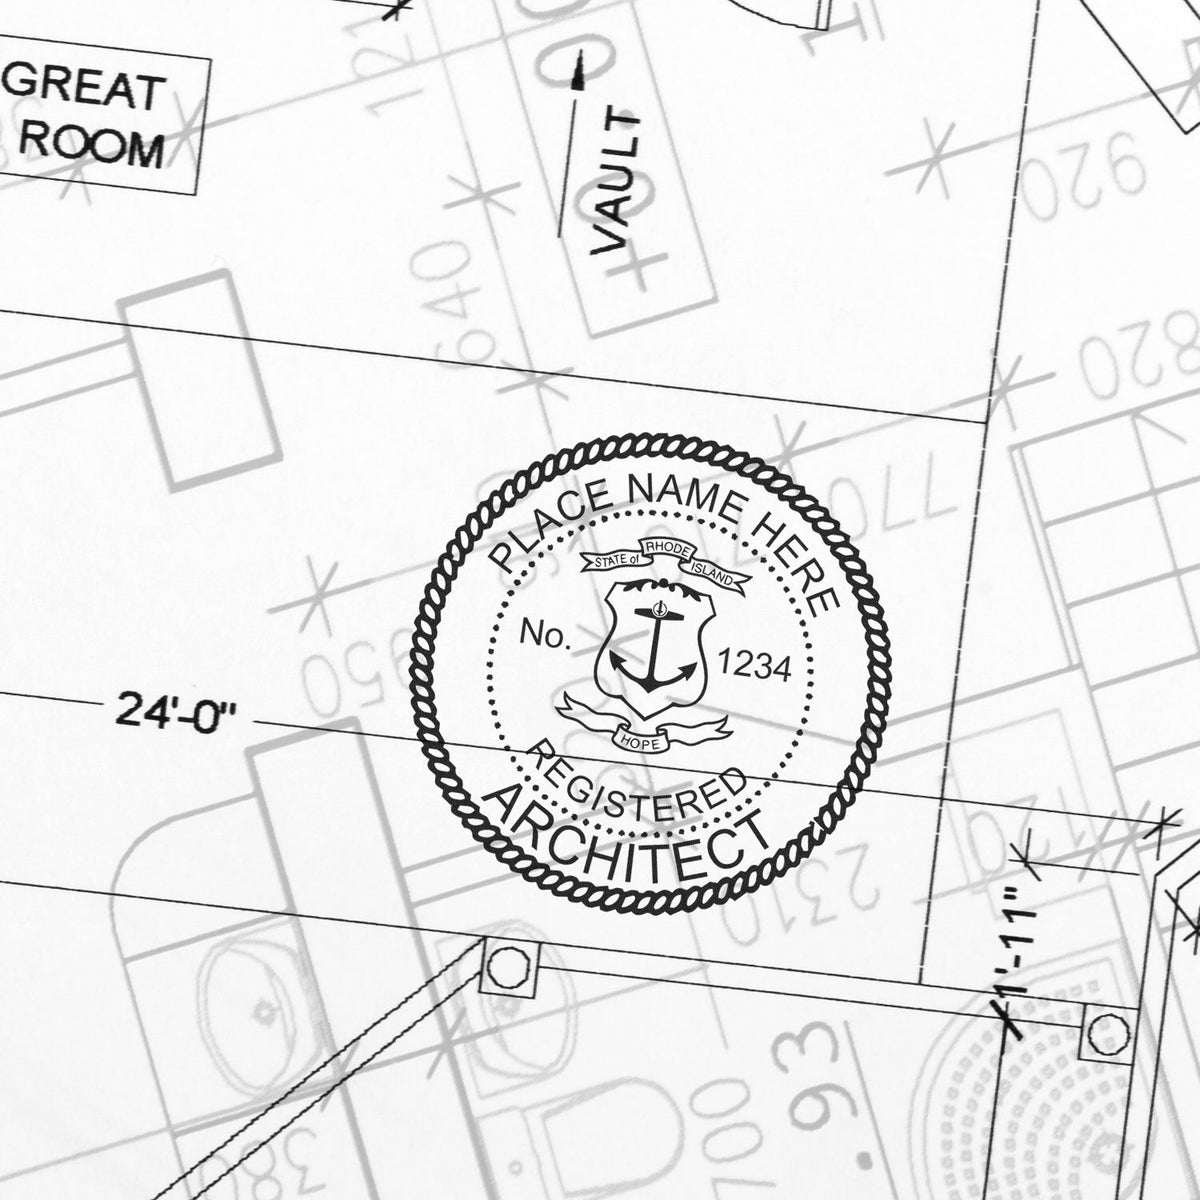 Digital Rhode Island Architect Stamp, Electronic Seal for Rhode Island Architect Artwork Overlay